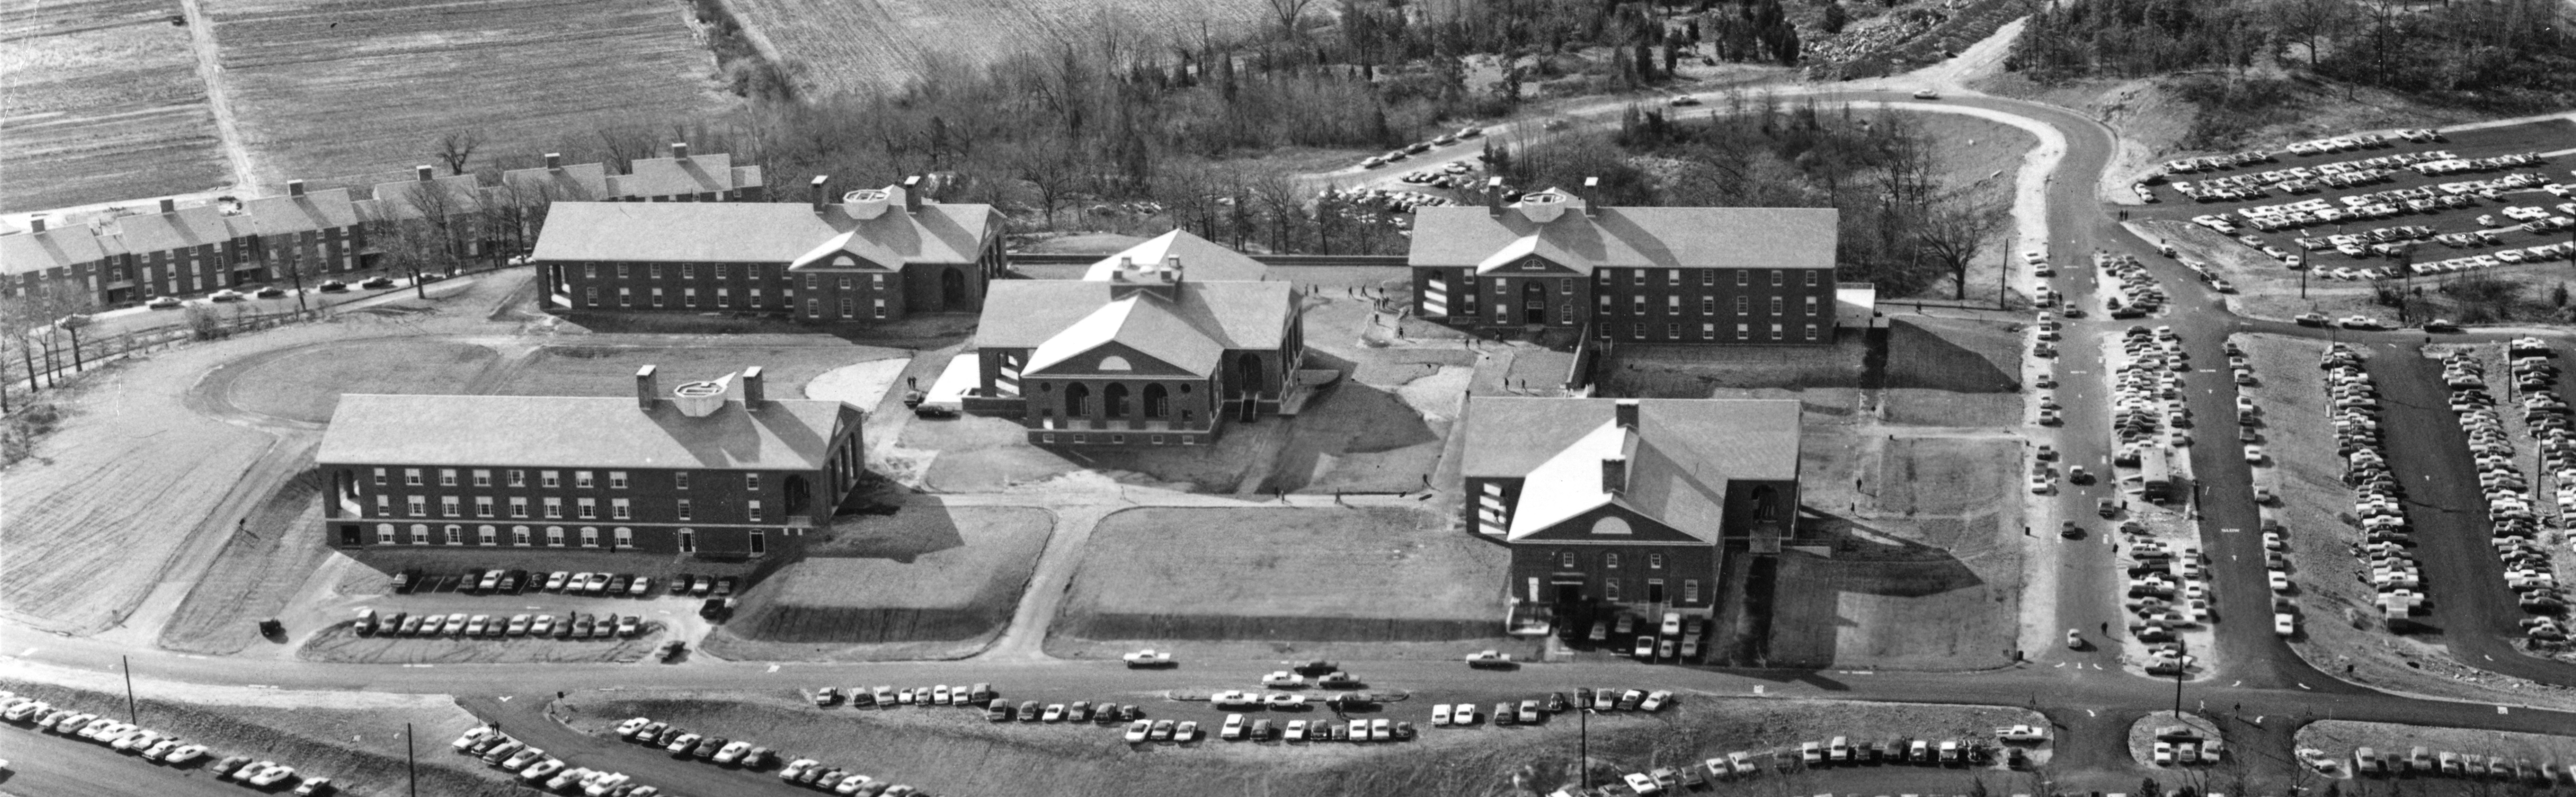 Bentley campus in 1968